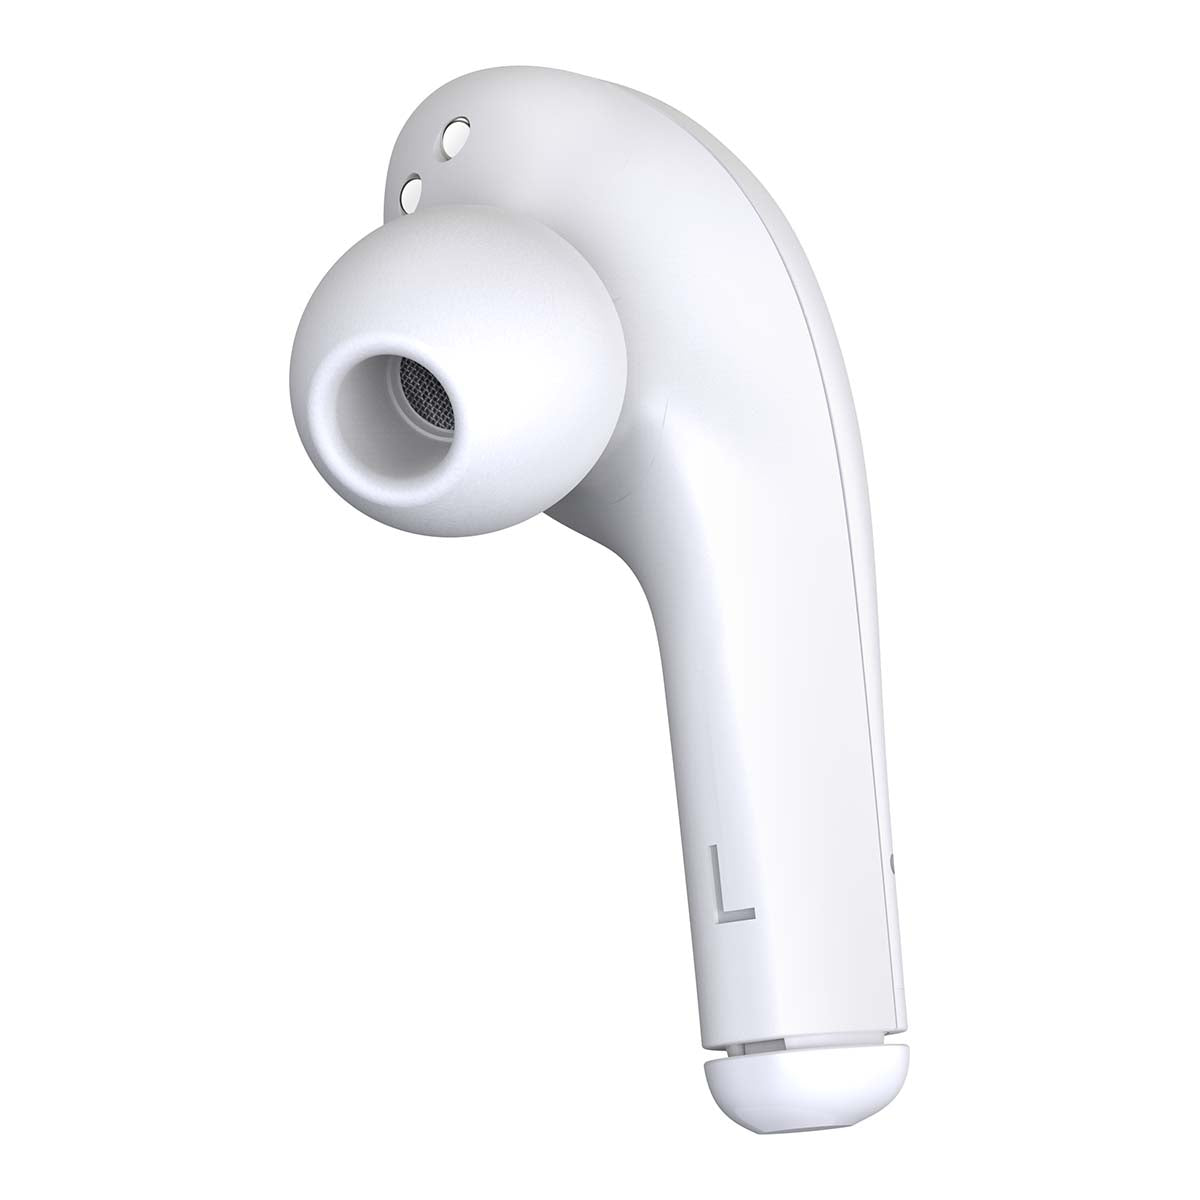 Motorola Vervebuds 500 True Wireless In-Ear Headphones - White